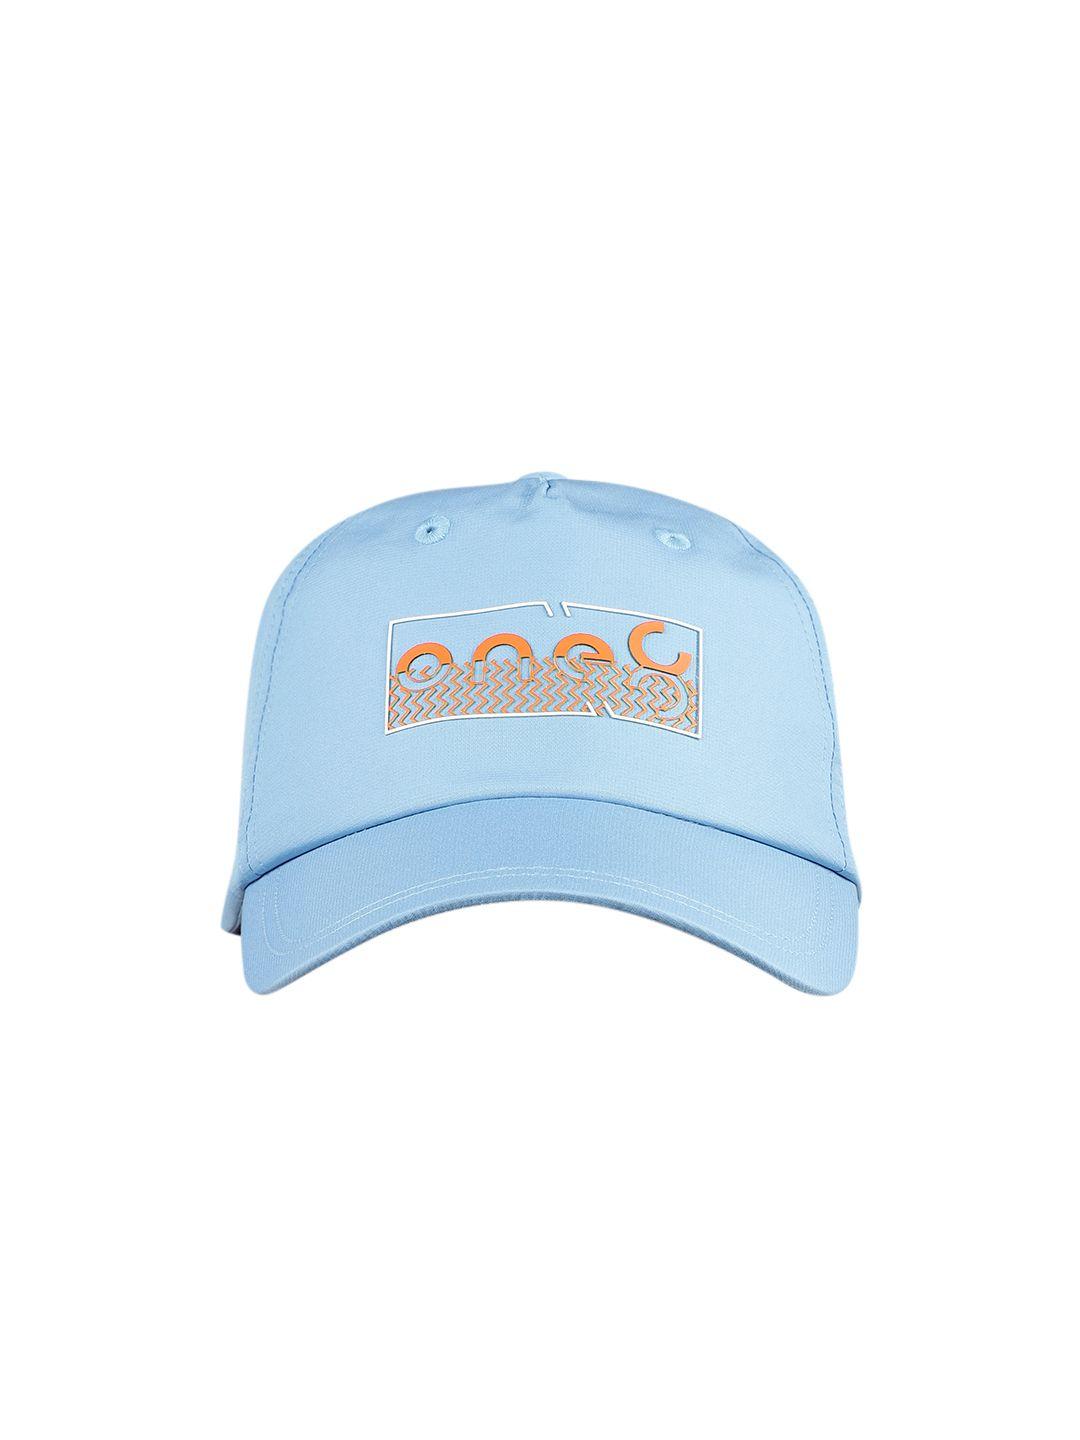 puma x one8 unisex blue printed baseball cap